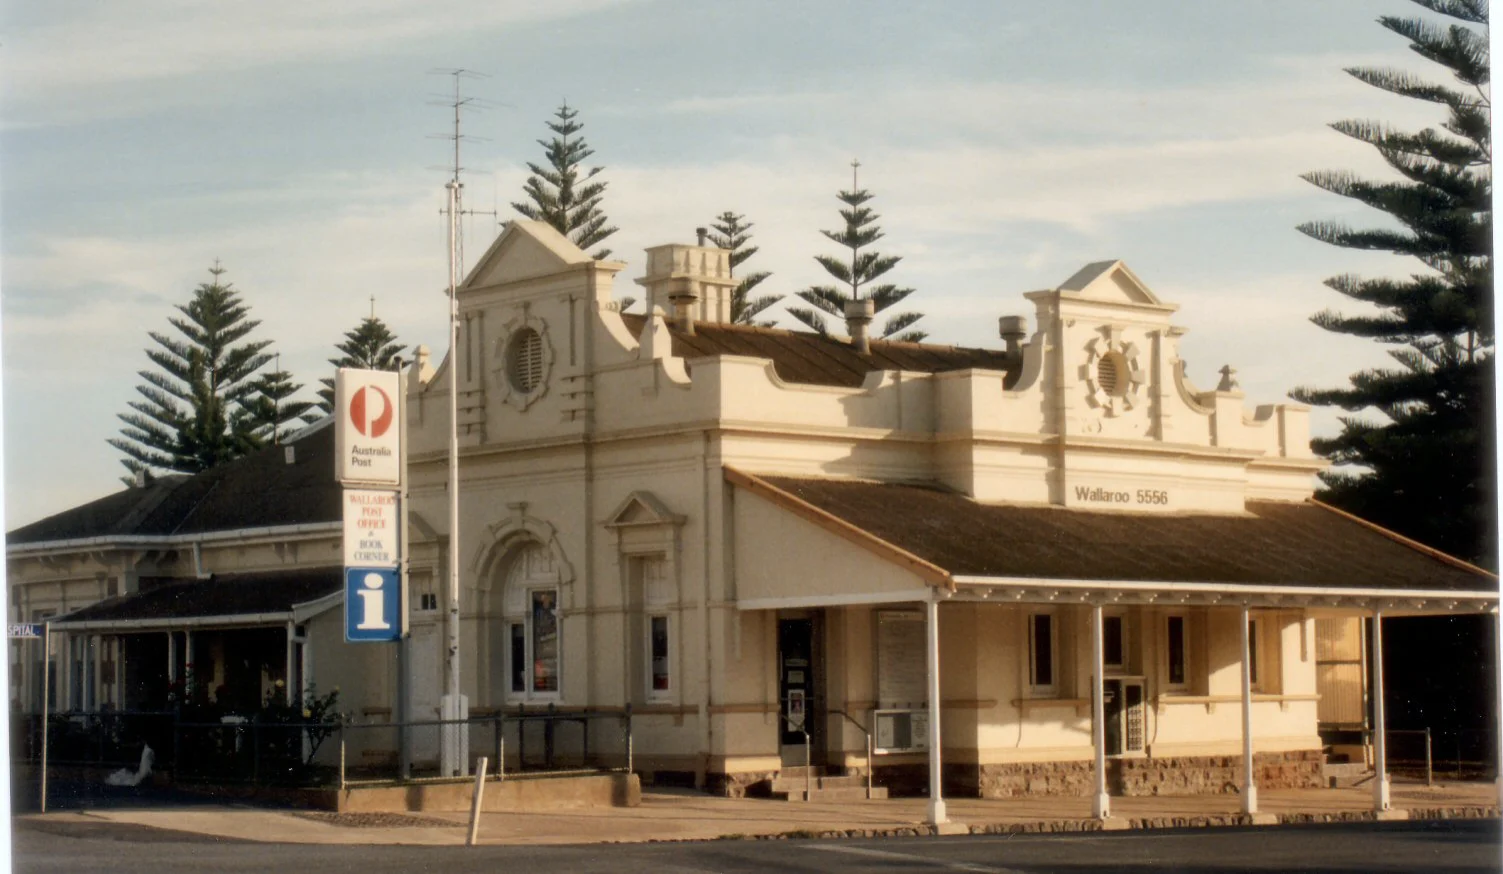 Second Post Office, Wallaroo